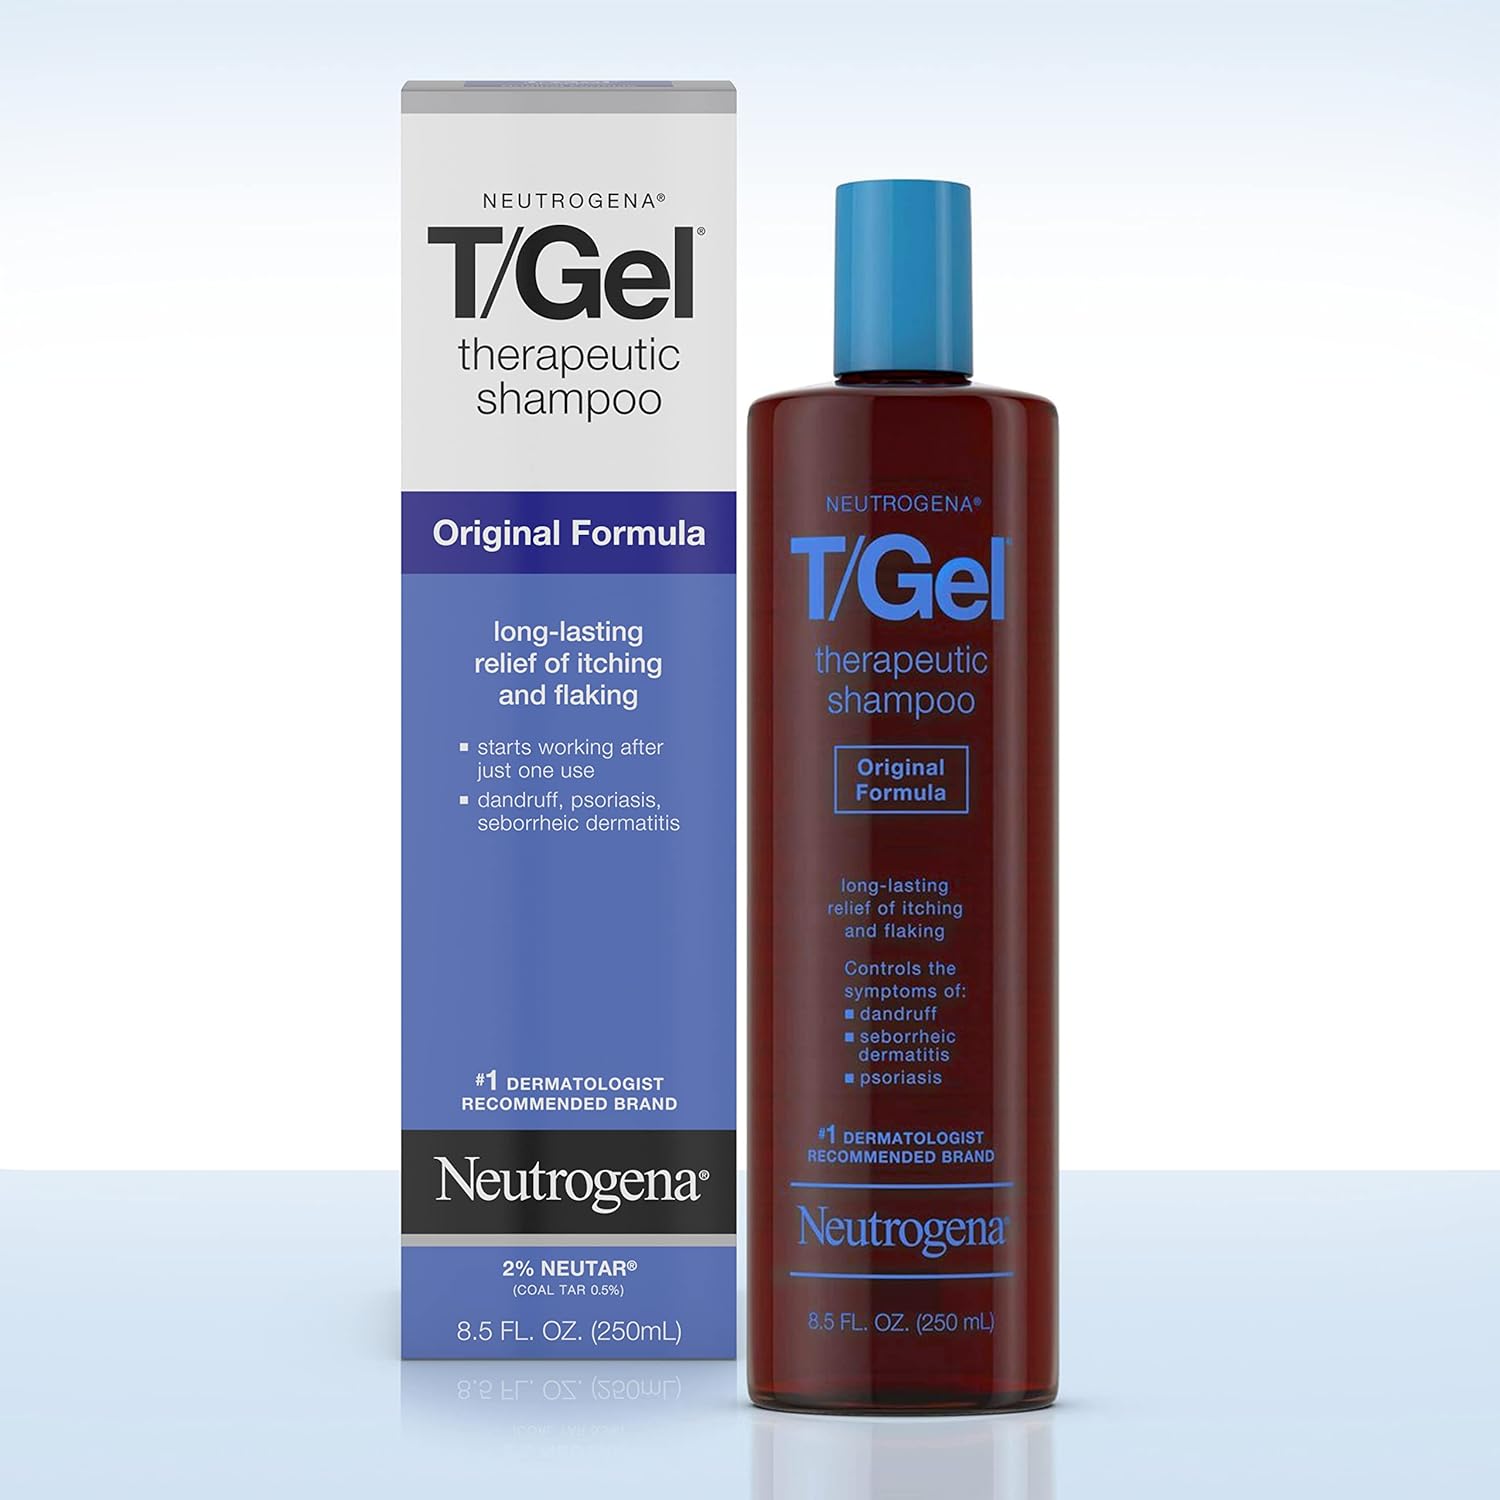 Neutrogena T/Gel Therapeutic Shampoo Original Formula, Anti-Dandruff